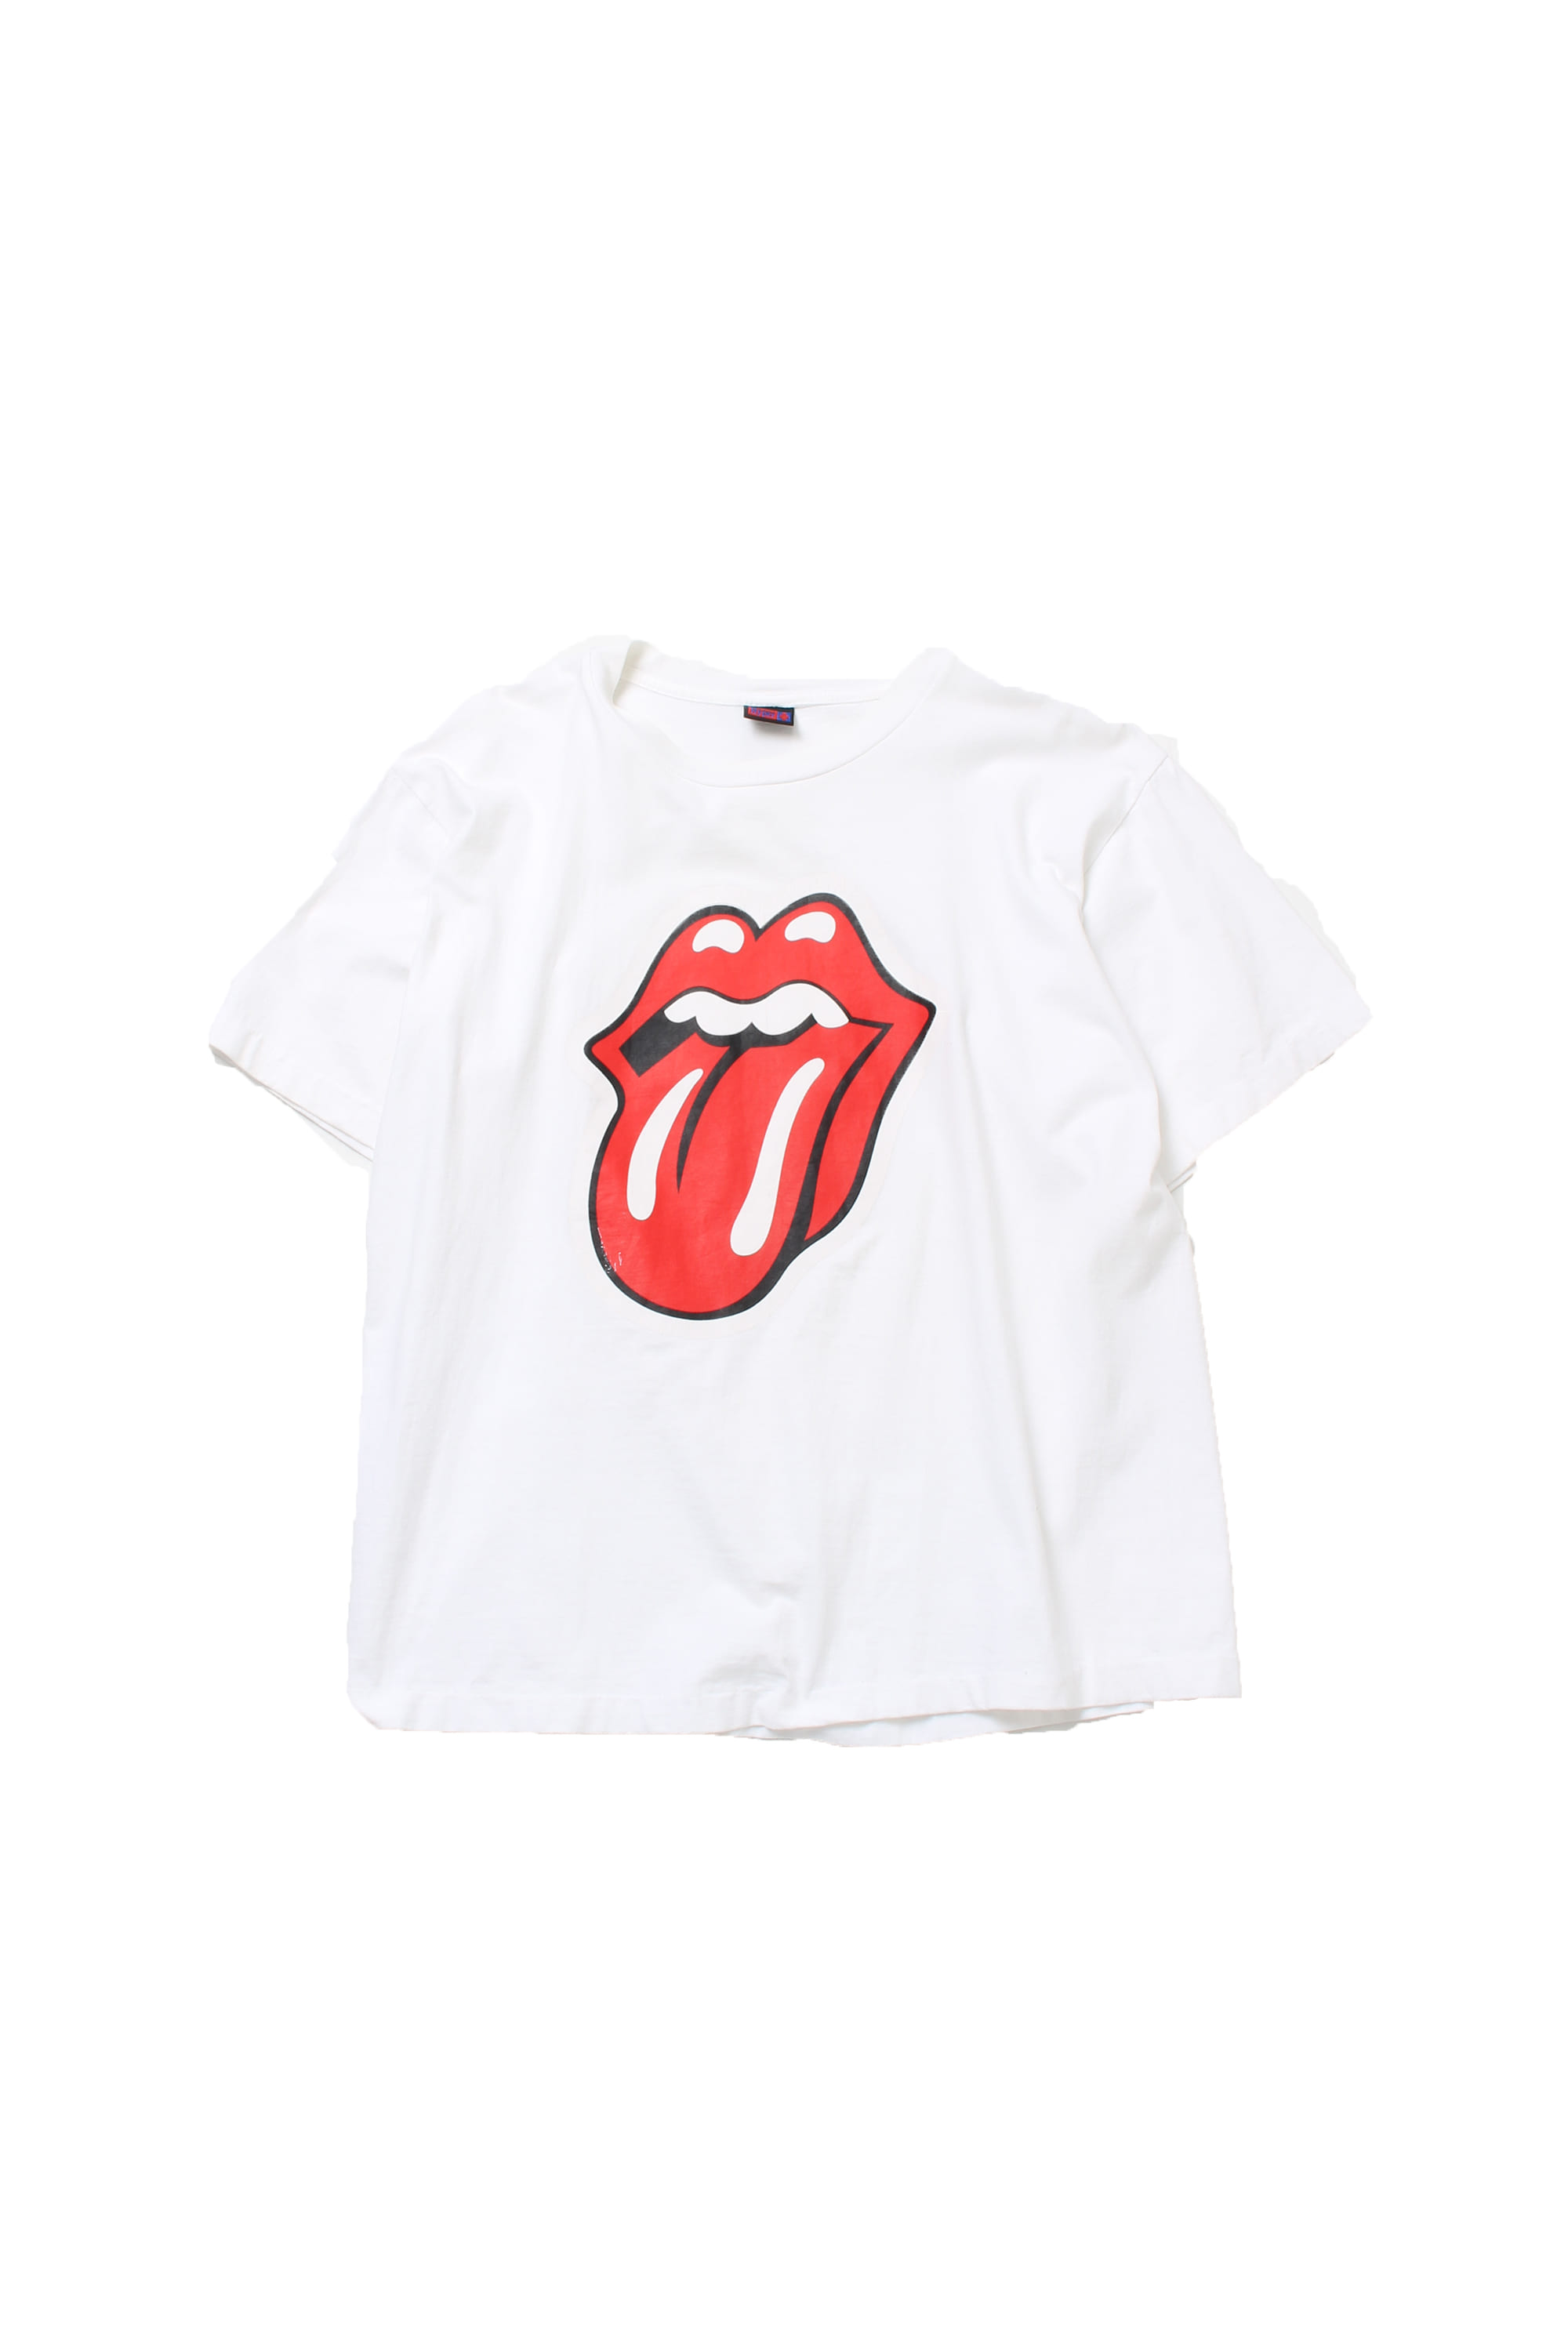 Rolling Stones Print T-shirts